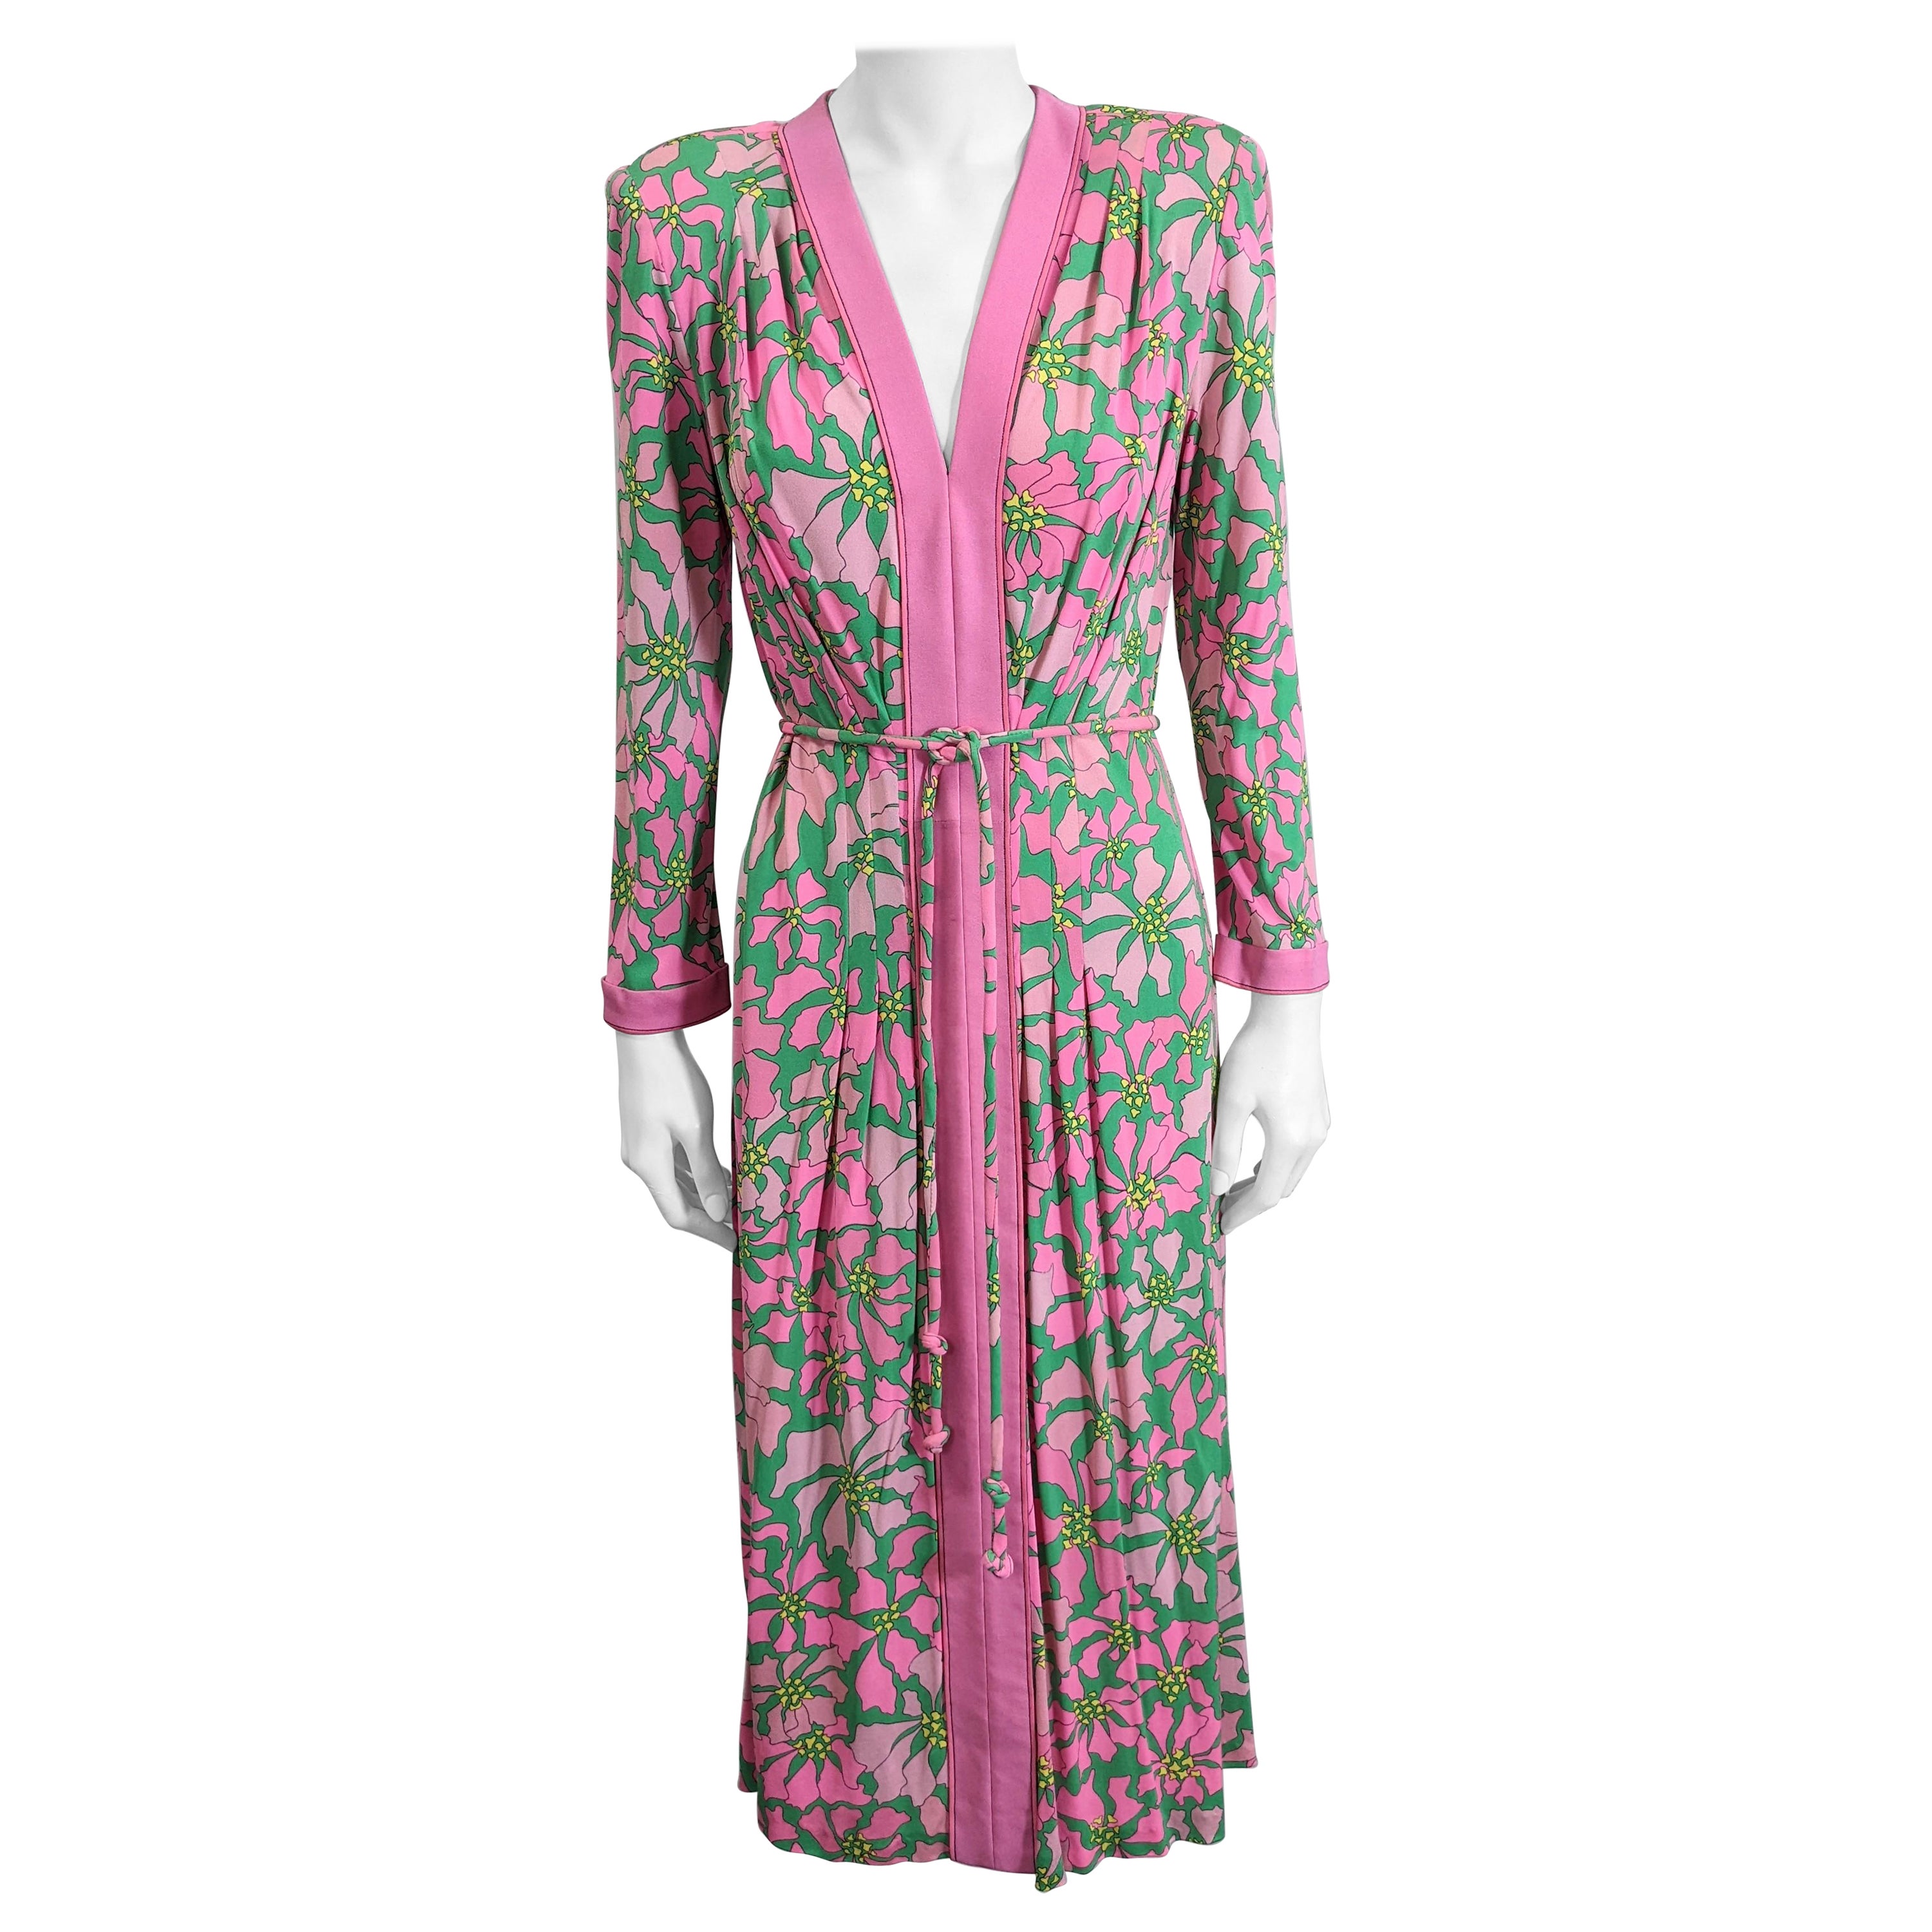 Bessi Silk Jersey Poinsettia Print Dress